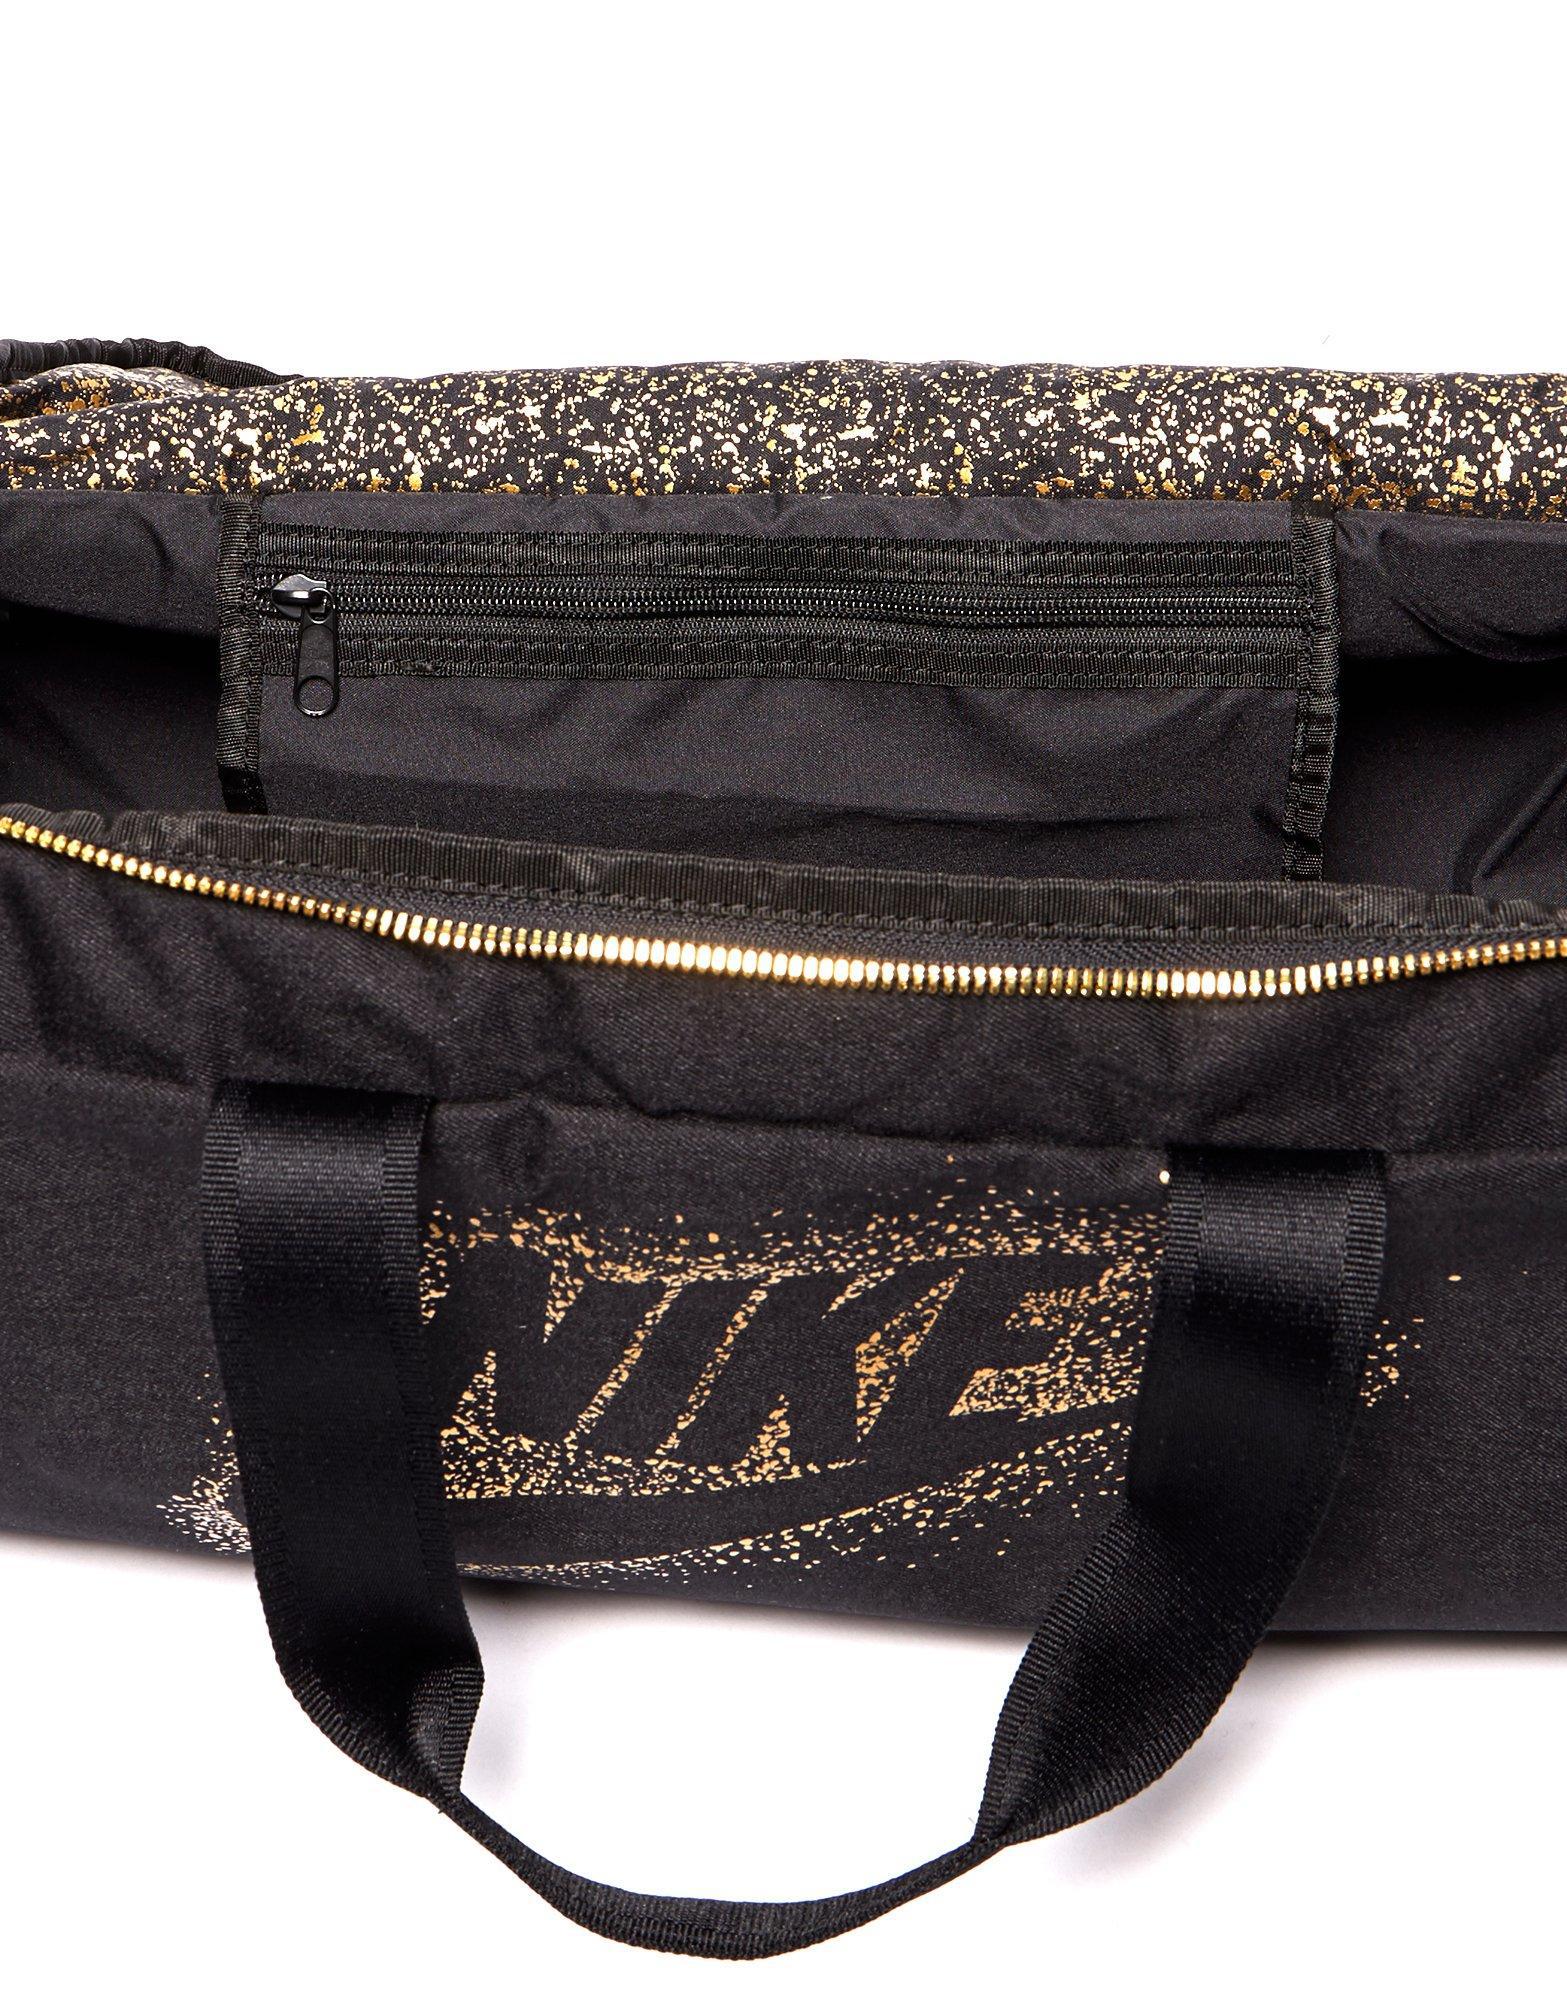 Nike Synthetic Met Duffle Bag in Black/Gold (Black) for Men - Lyst